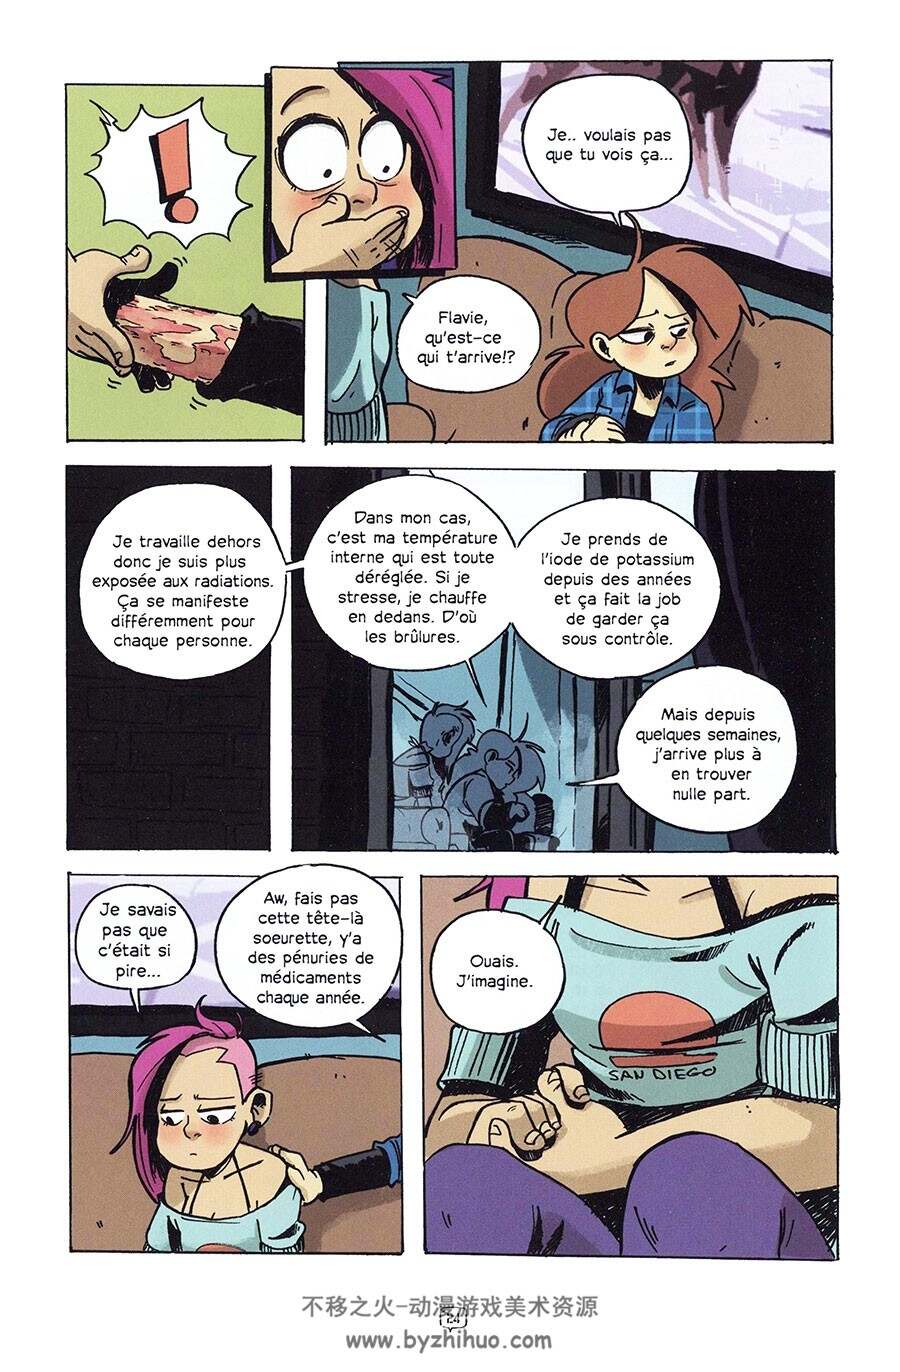 Hiver Nucleaire  第2册 WAVERLY 彩色卡通法语欧美漫画